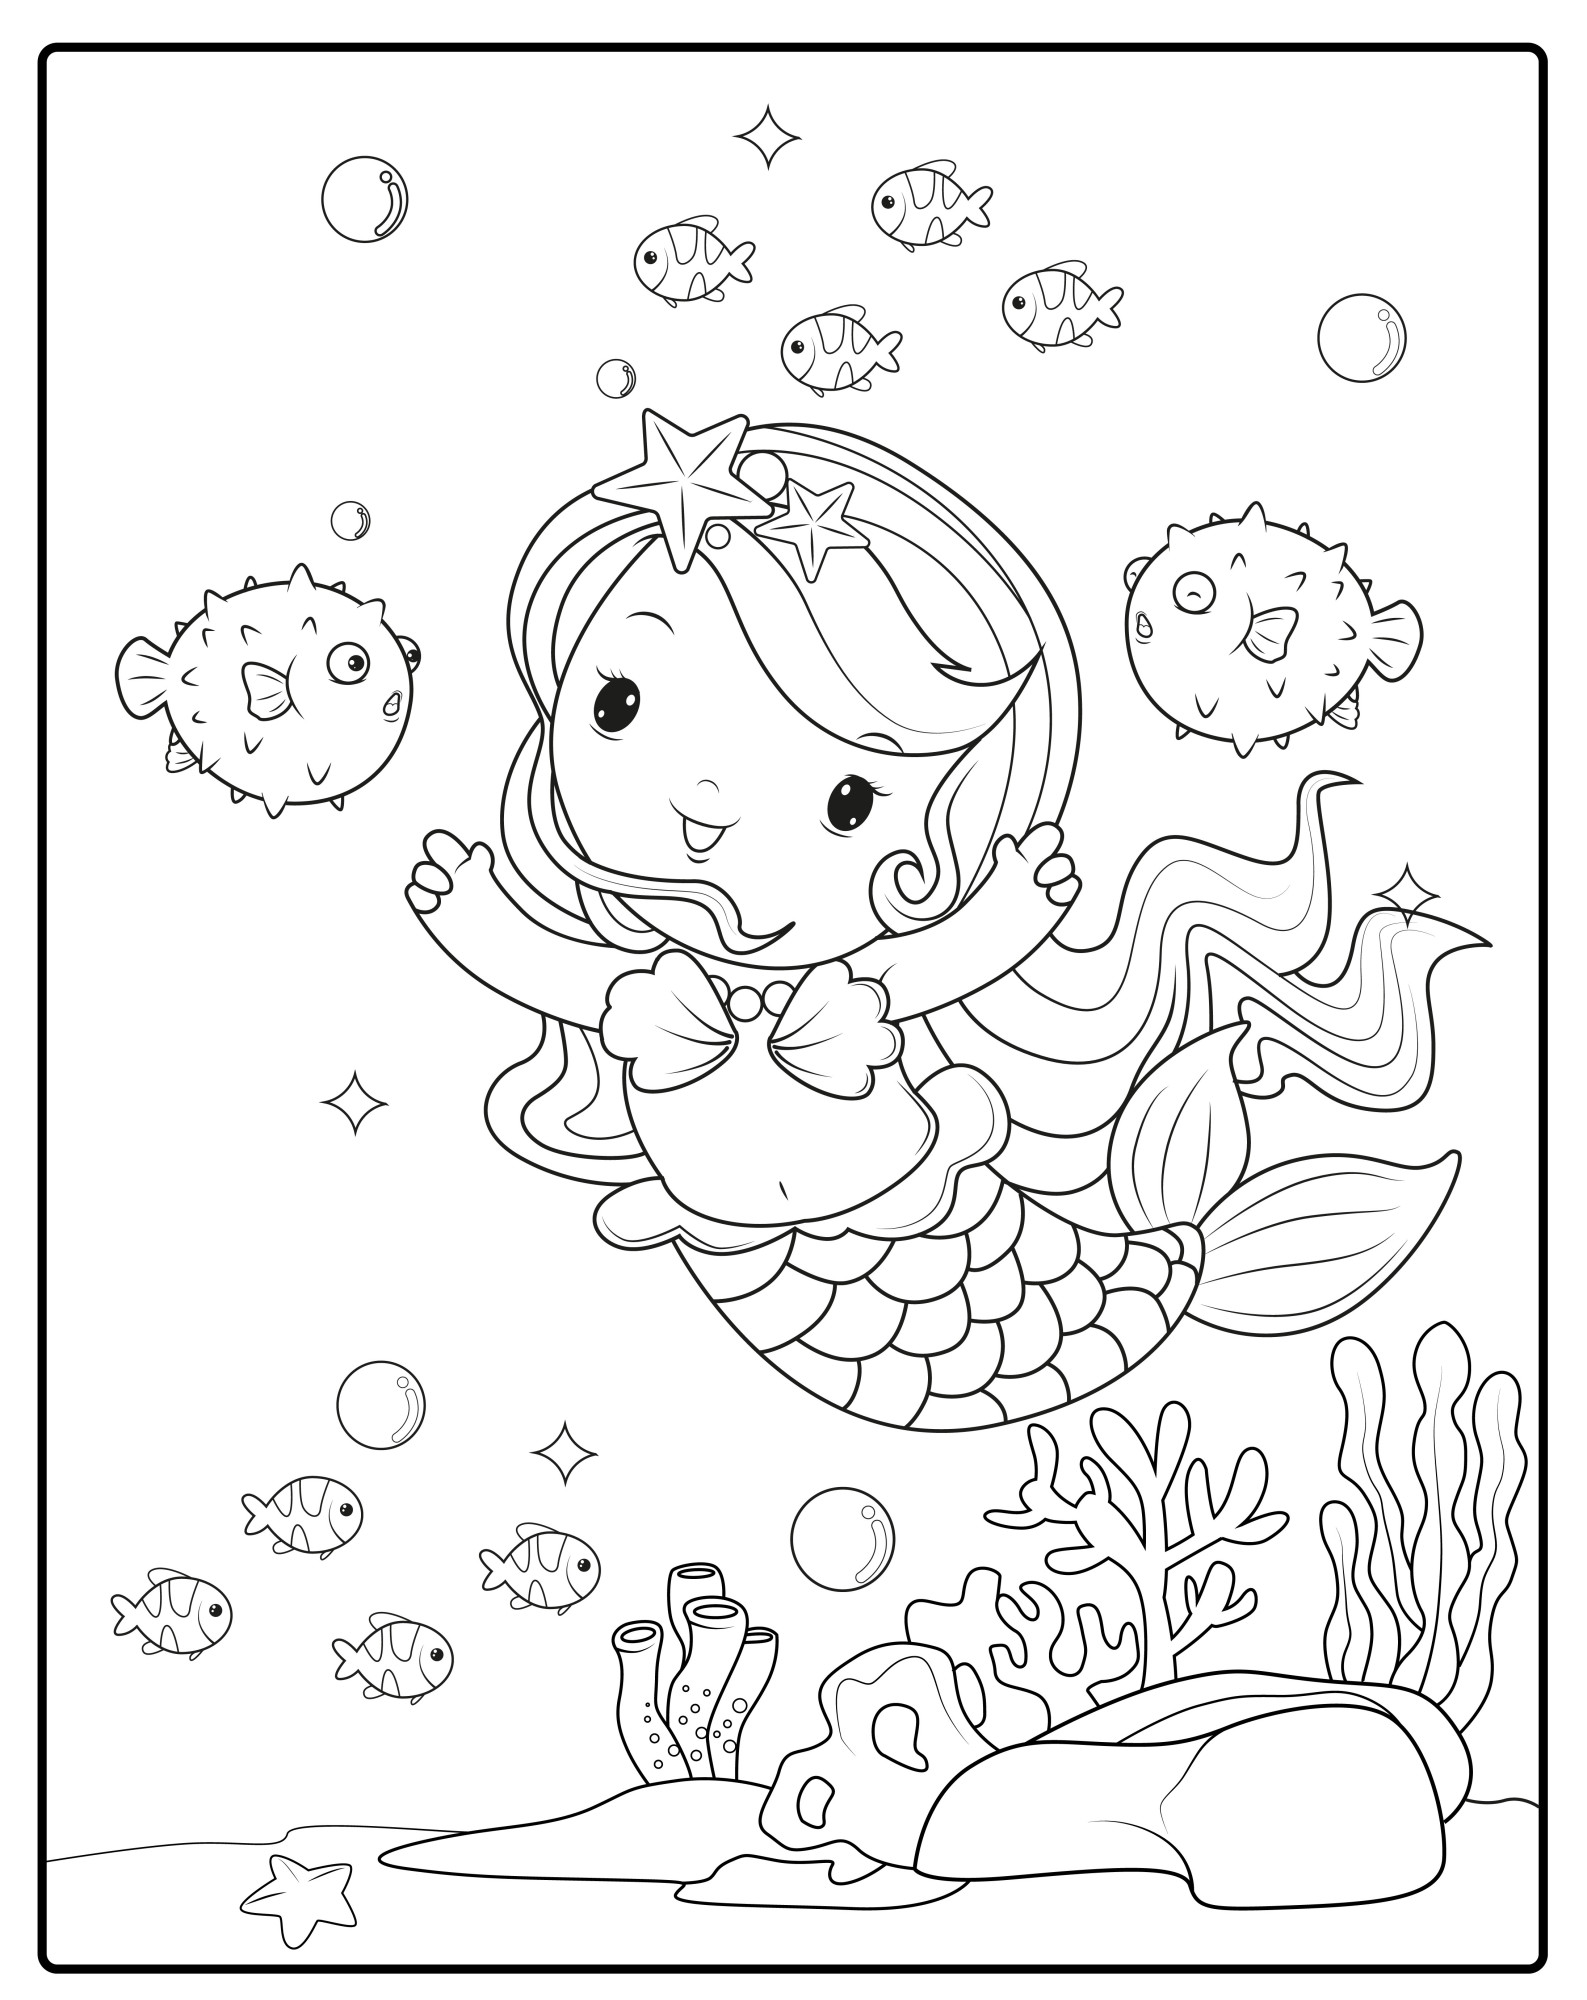 Раскраска для детей: русалка и рыба фугу